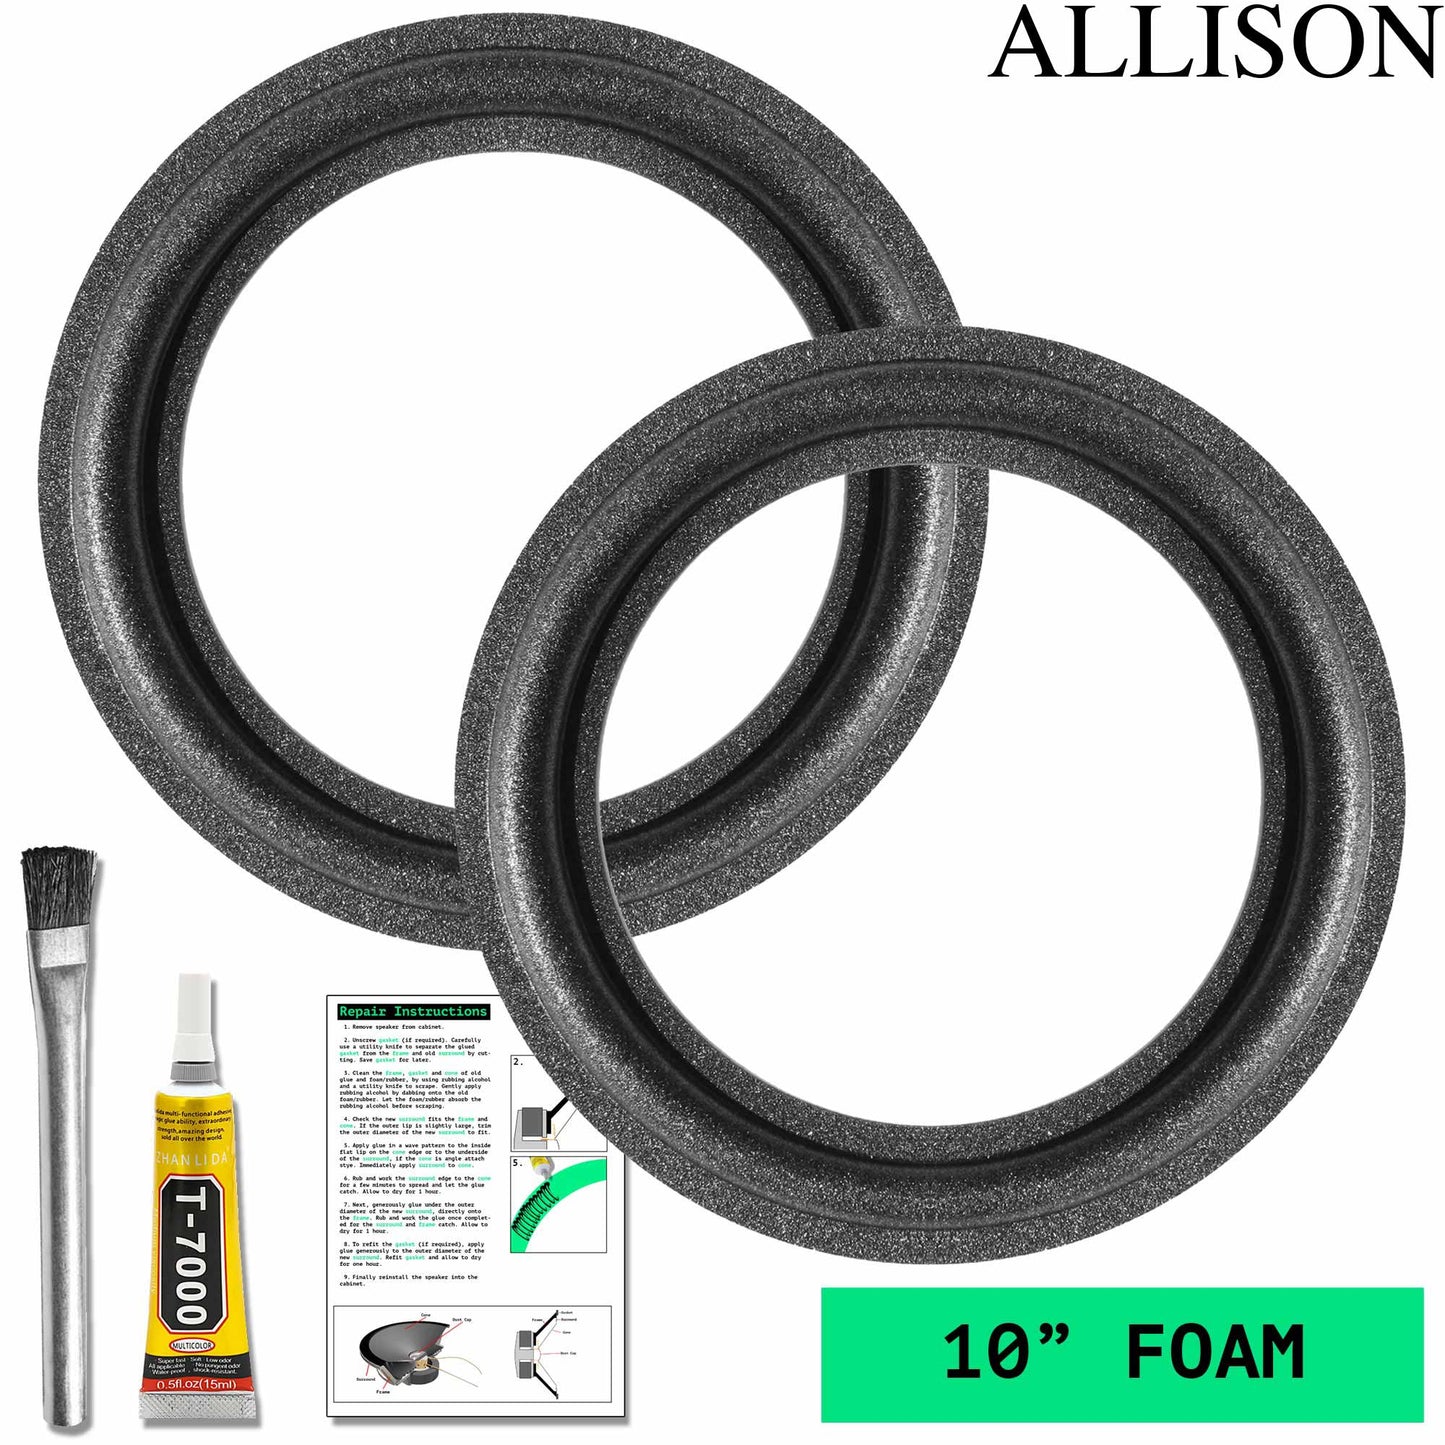 Allison One, 1, 20, 10" Foam Repair Kit